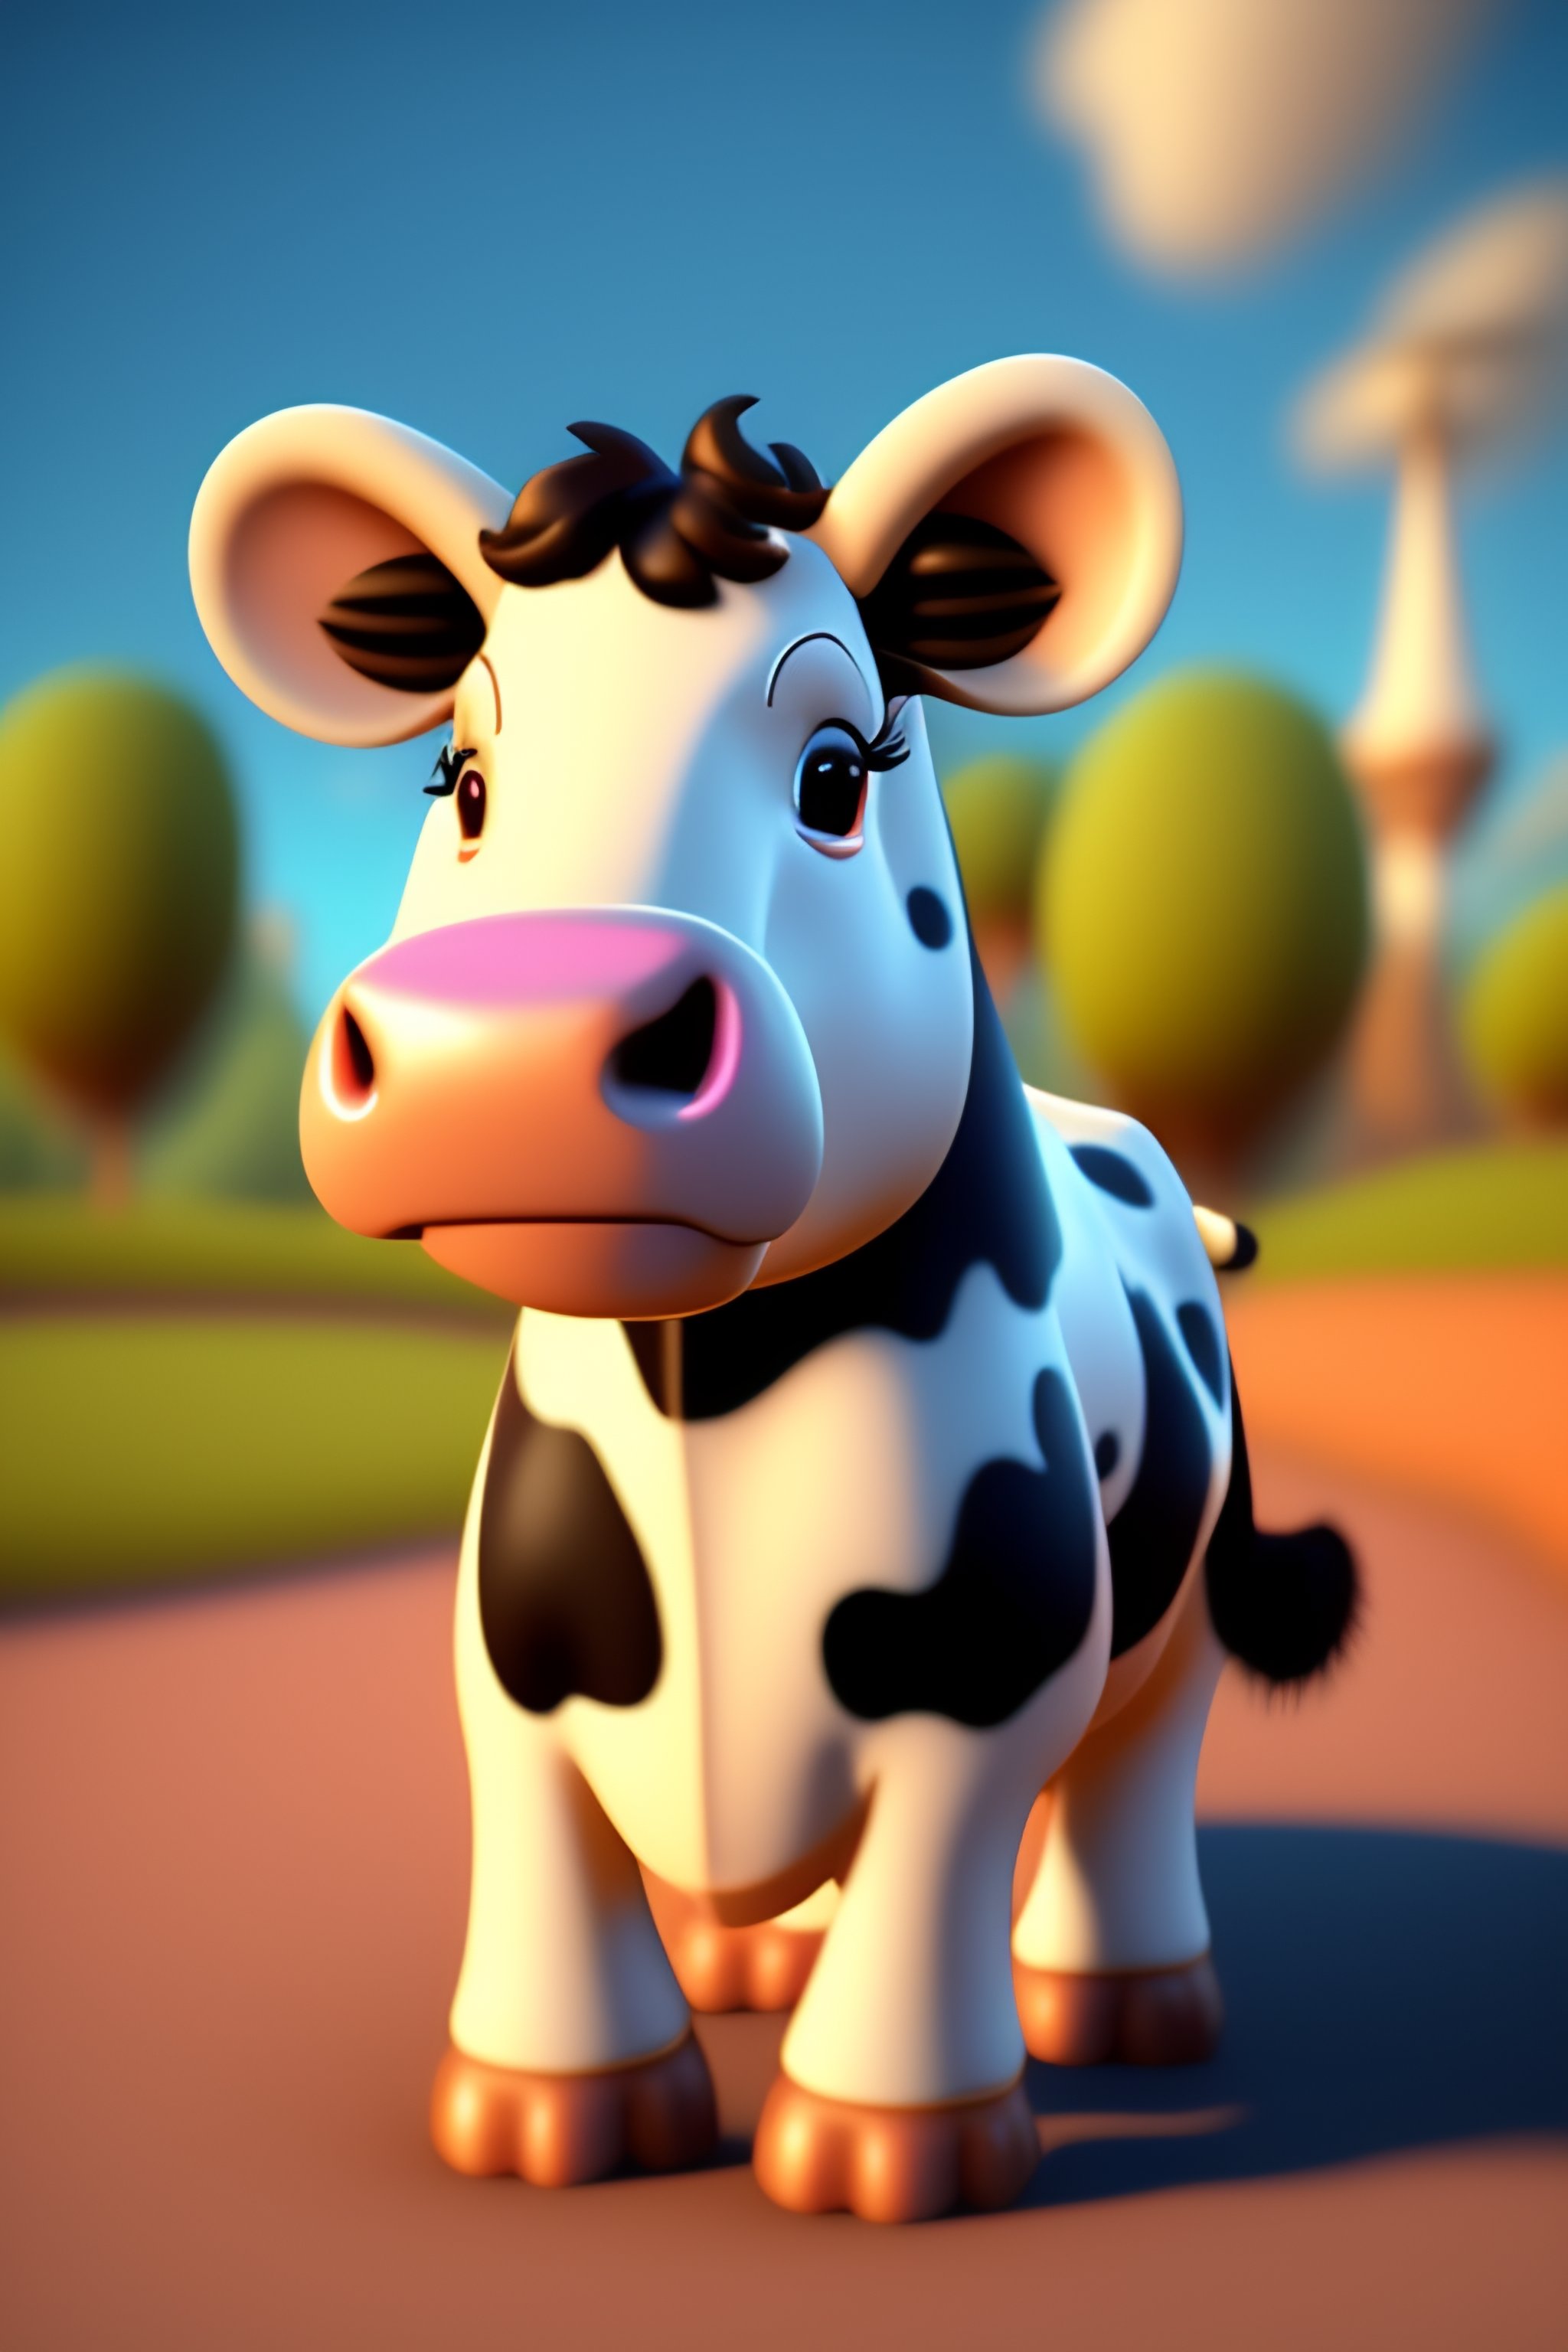 cow cartoon characters